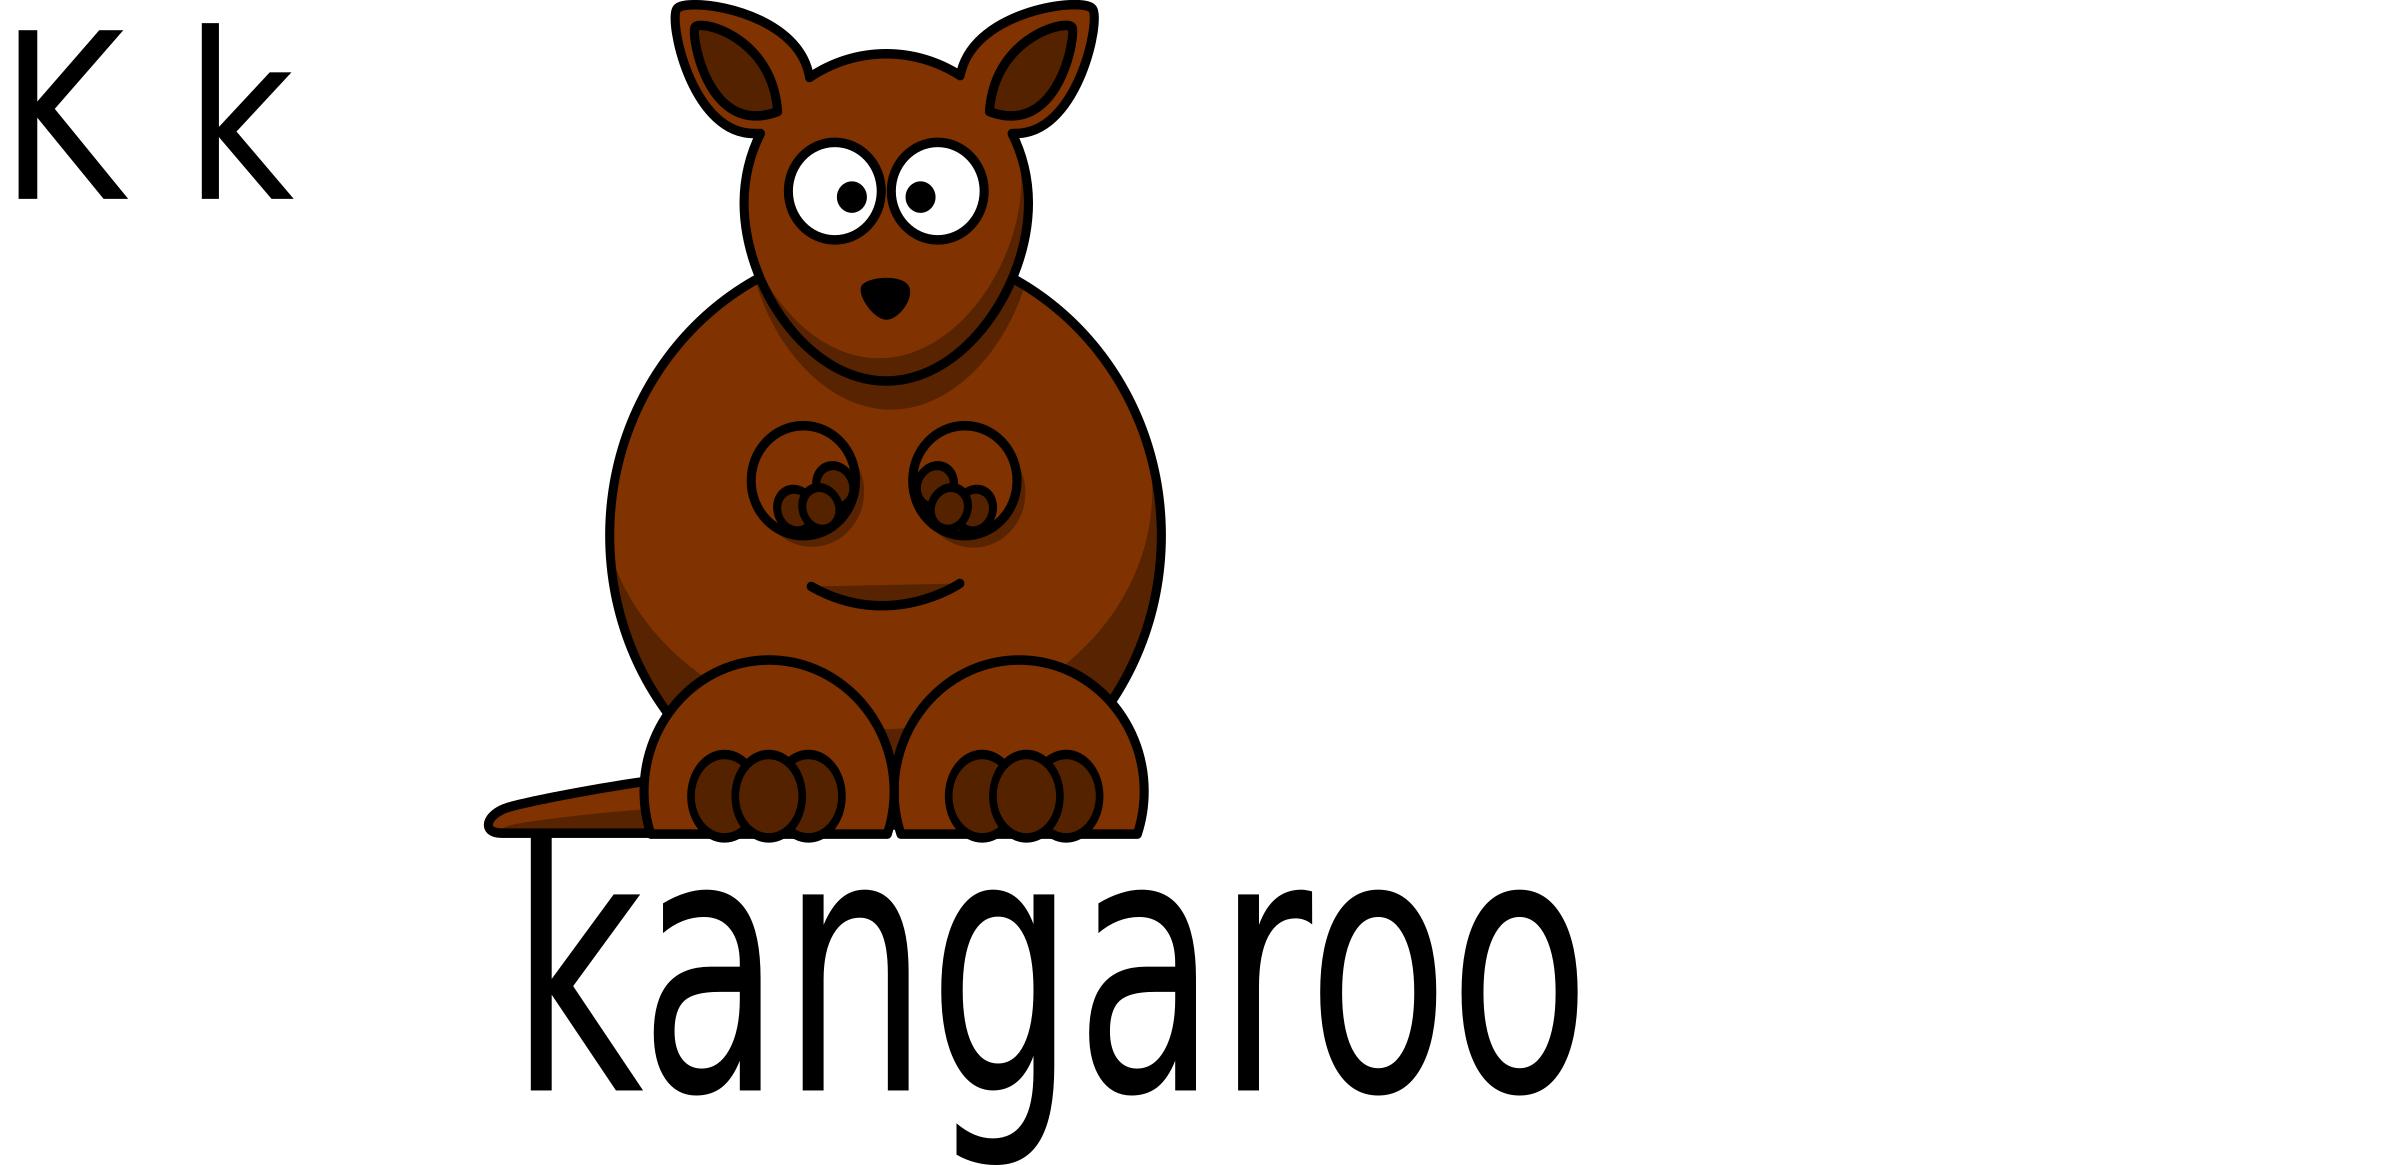 K for kangaroo png